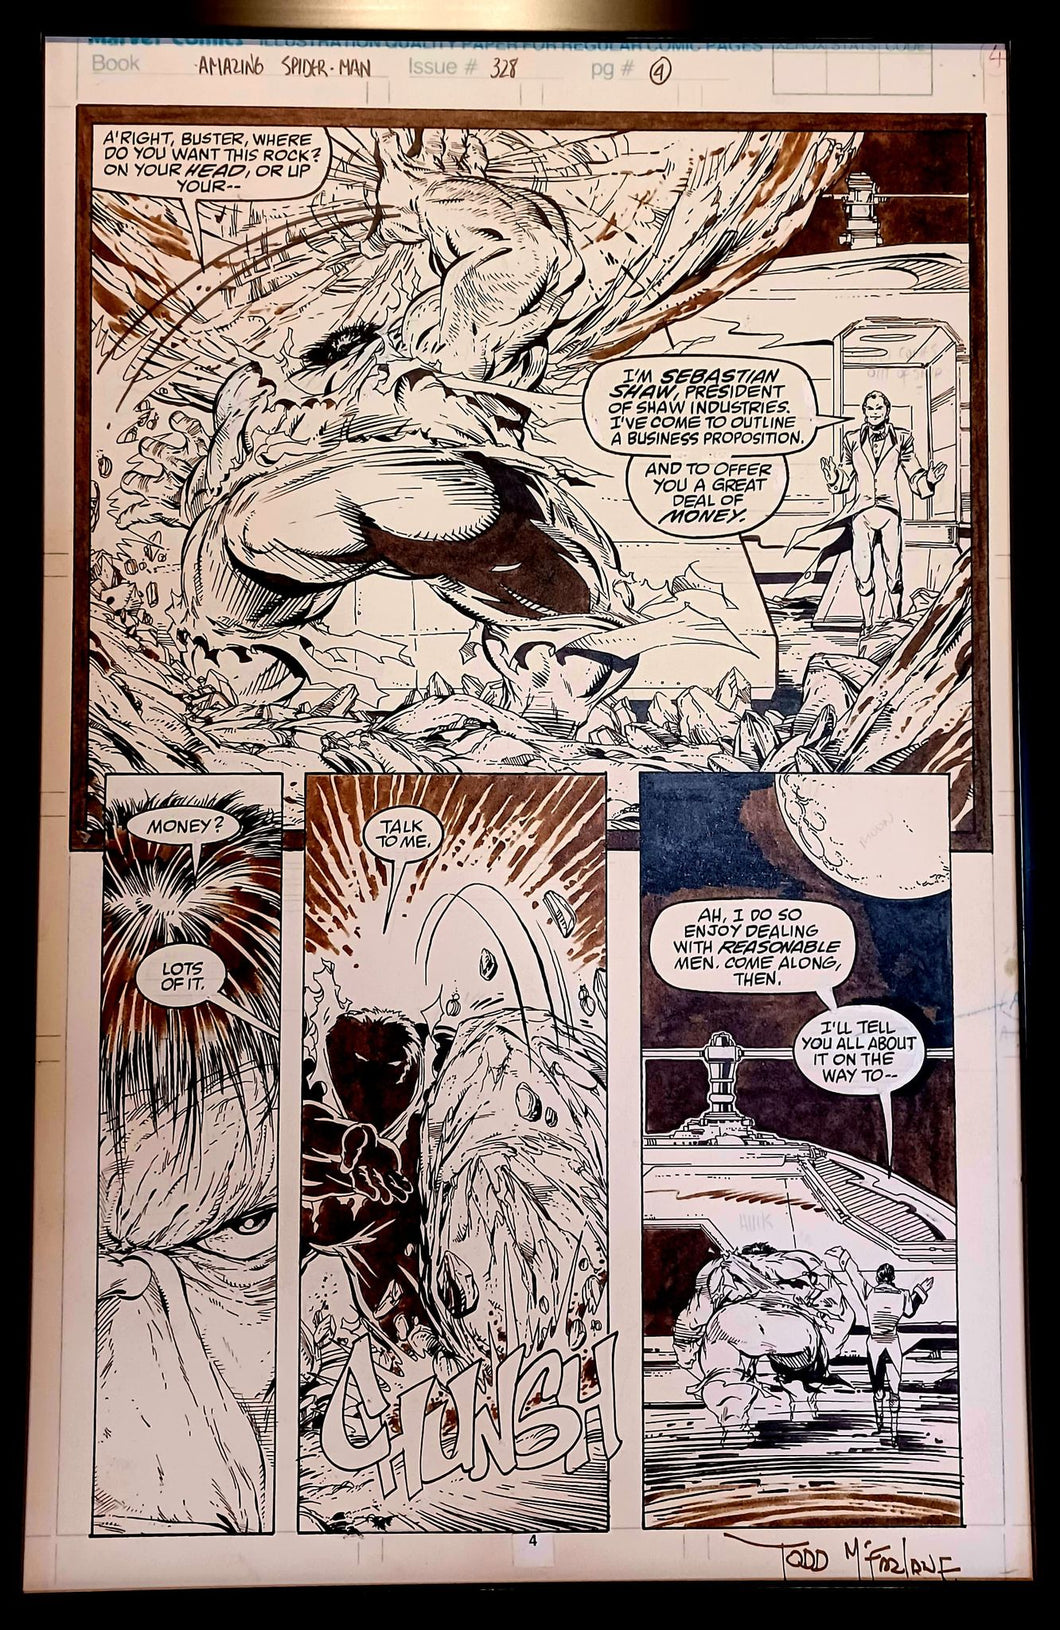 Amazing Spider-Man #328 pg. 4 by Todd McFarlane 11x17 FRAMED Original Art Print Comic Poster